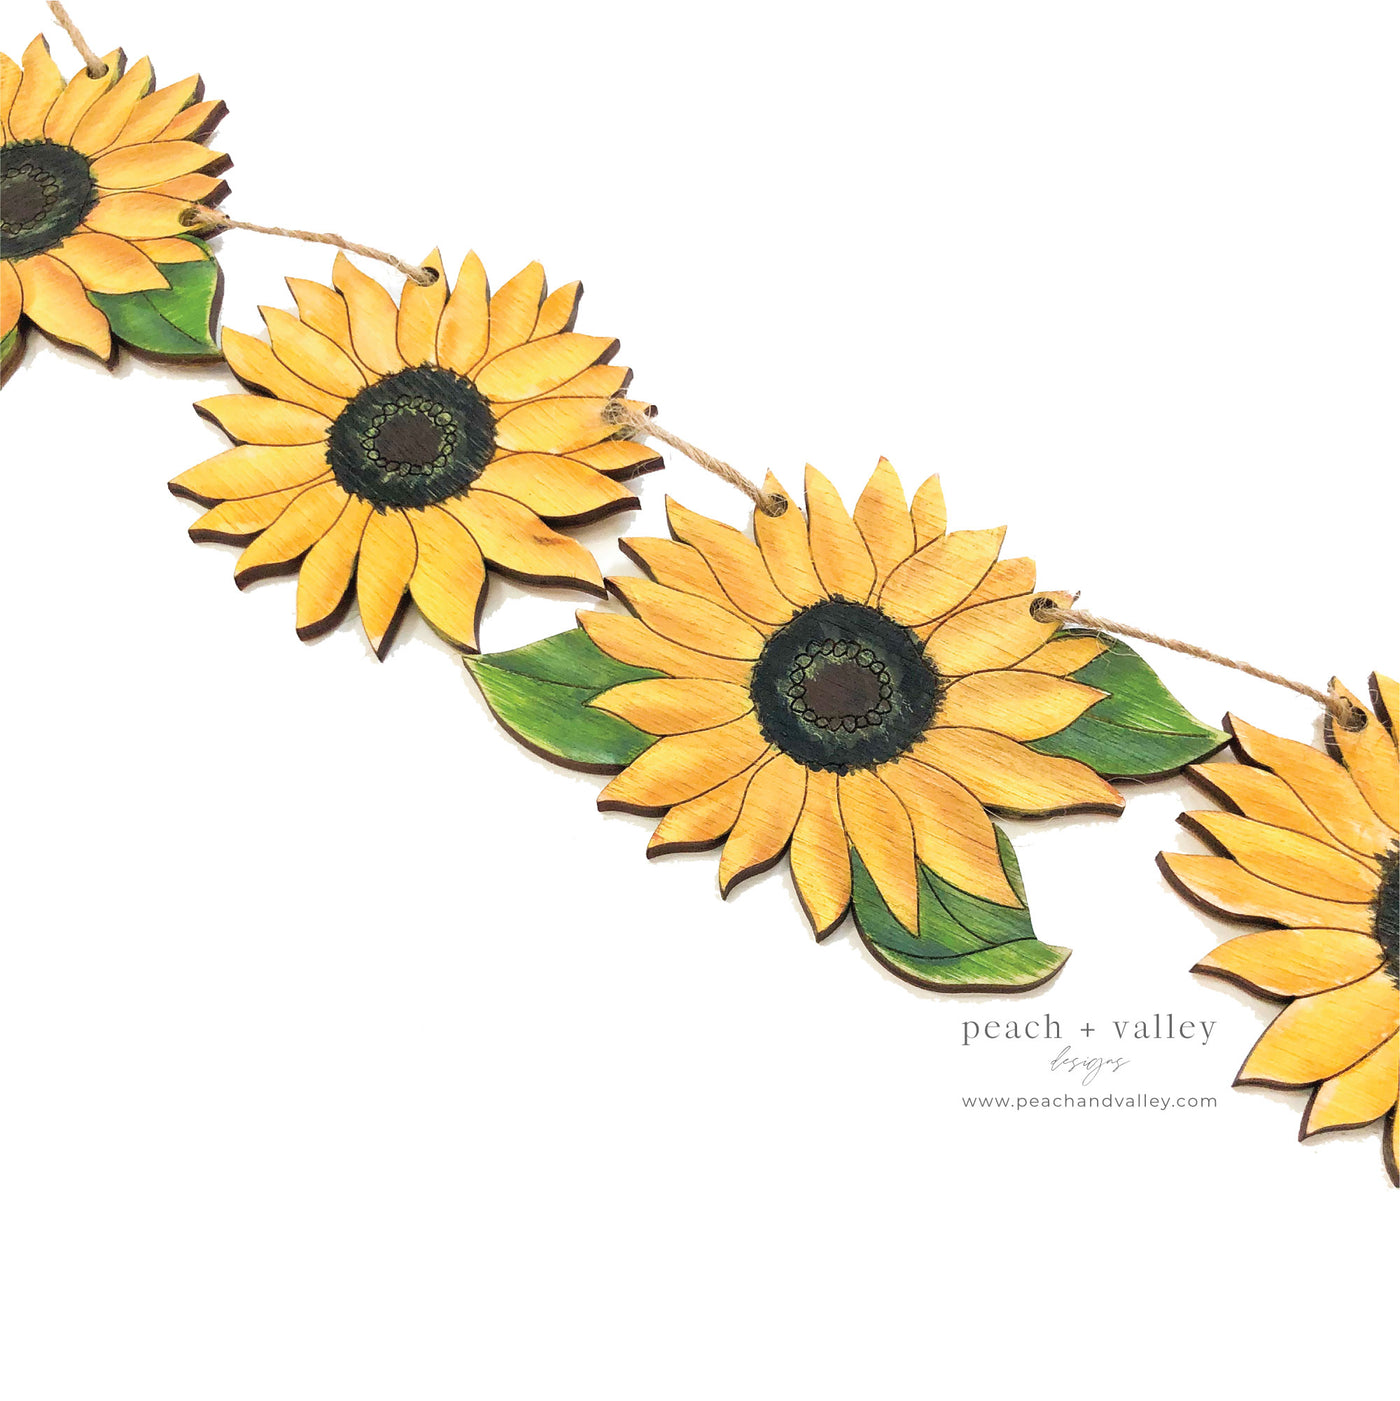 Sunflower Banner Blank